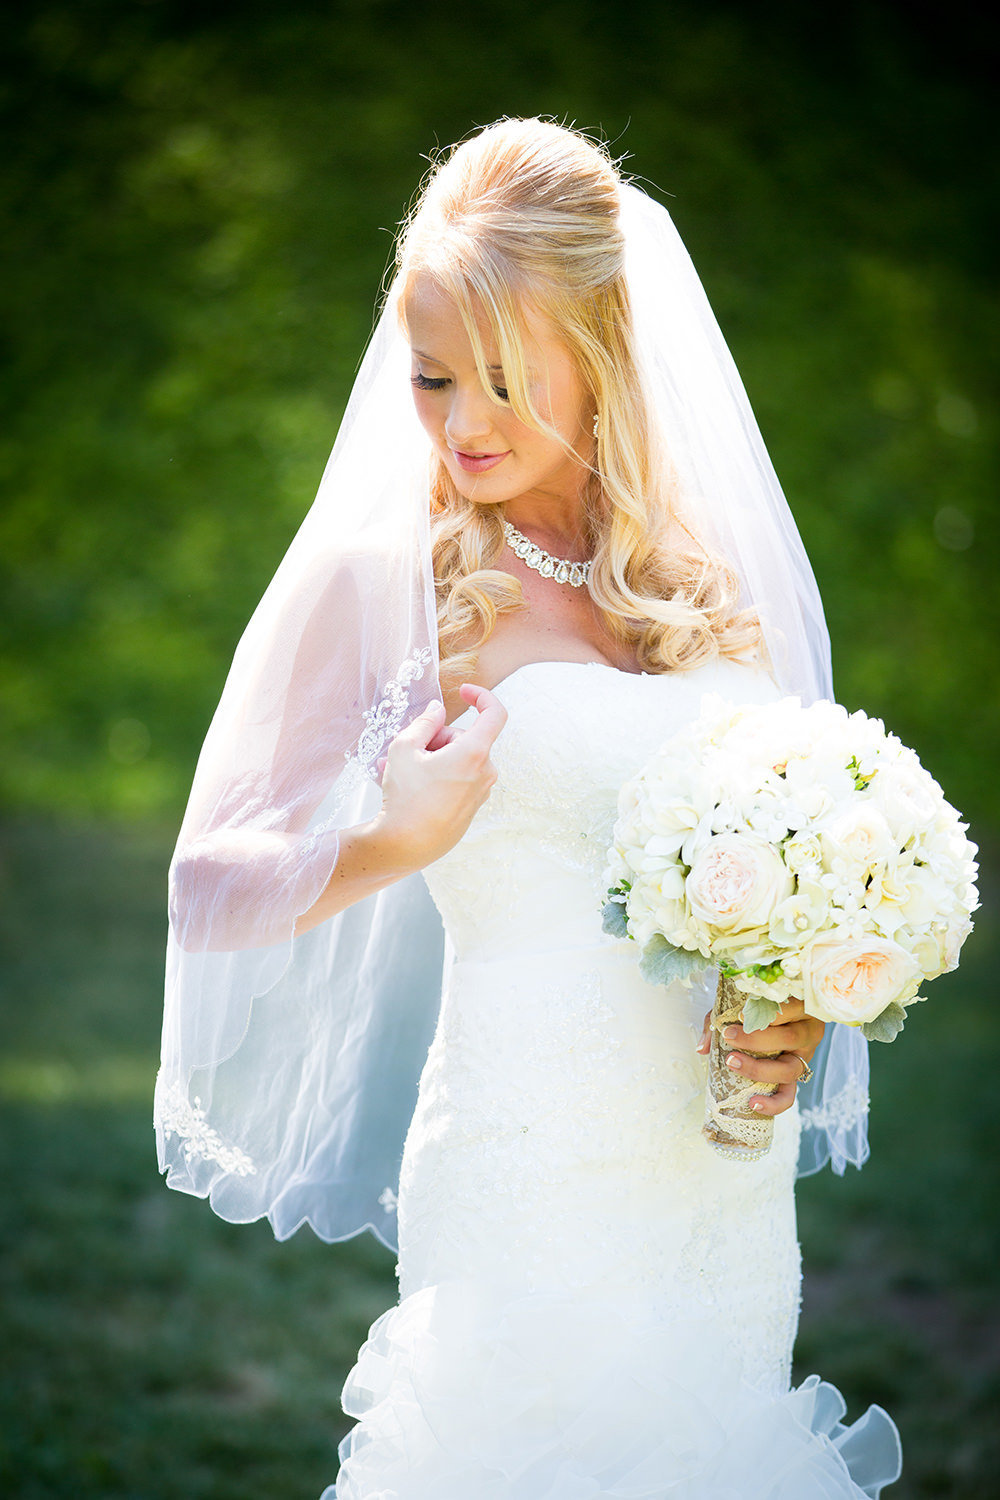 romantic bride picture with a pretty veil